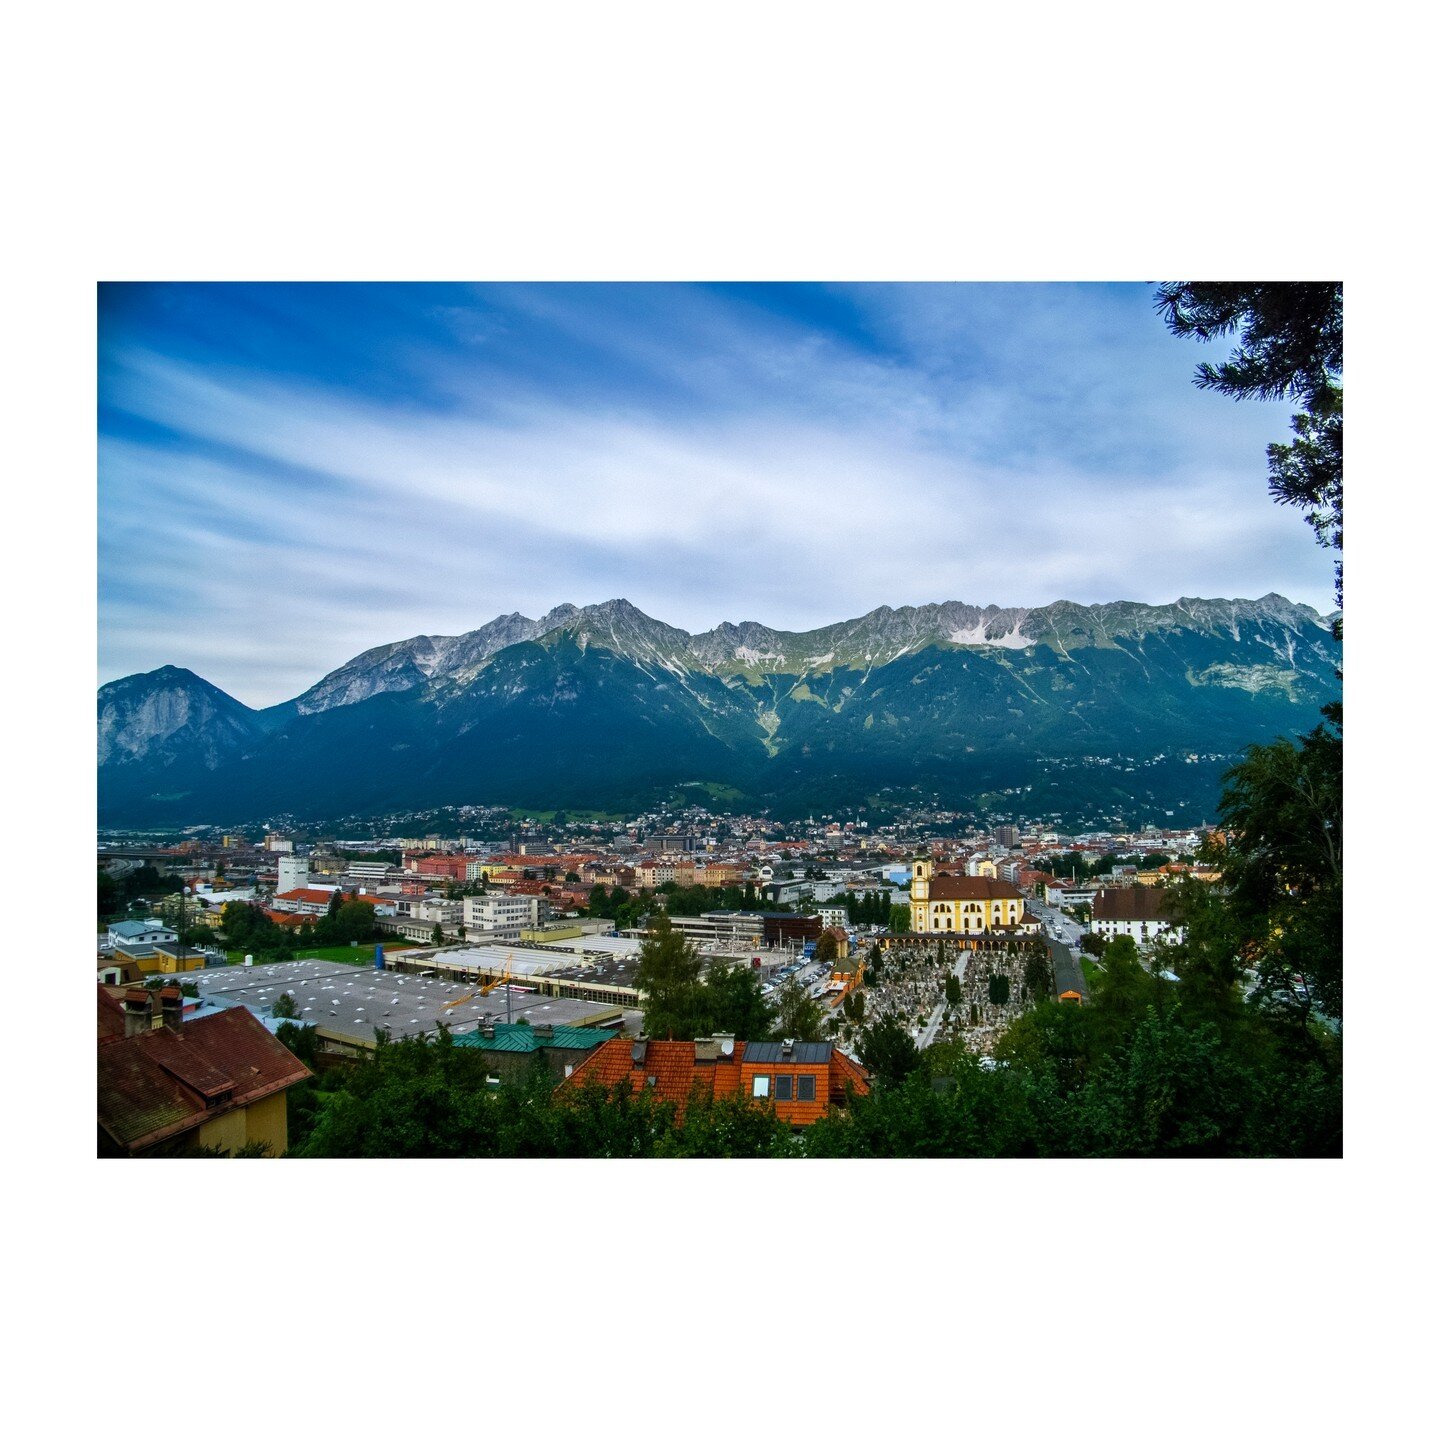 The Alps from Innsbruck, Austria 2013

Click on the link in bio to order your copy now! 
__________
#WallArtwork #CityScape #Tyrol #EuropeanDestinations #WallArtPhotography #TheAlps #Landscape #InssbruckAustria #AlpsCity #PhotoOnYourWall #WallArtPrin